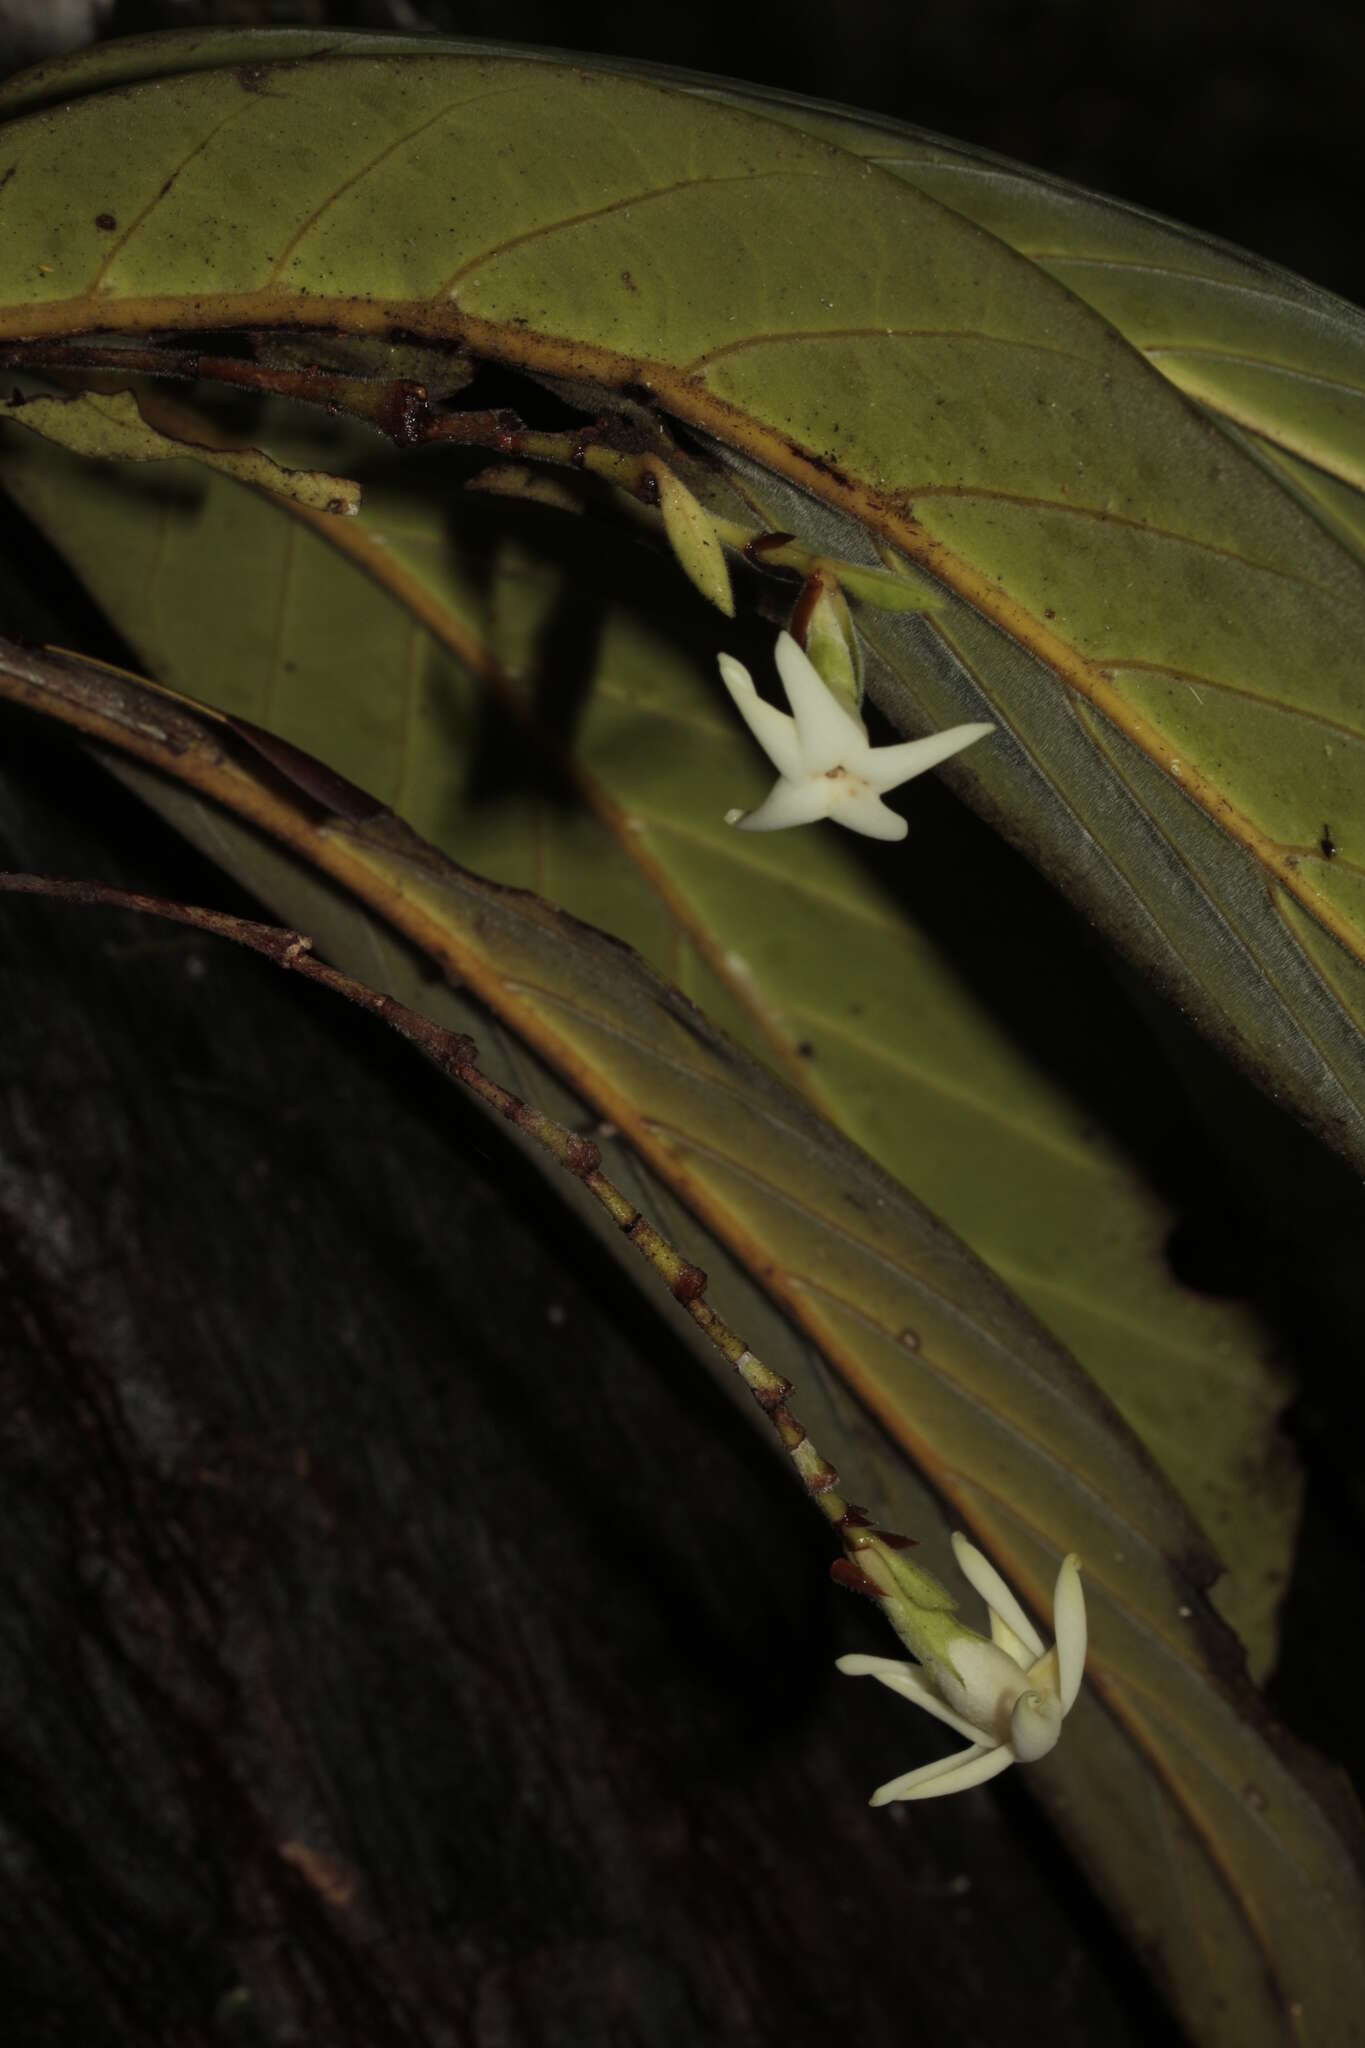 Image of Atractocarpus pterocarpon (Guillaumin) Puttock